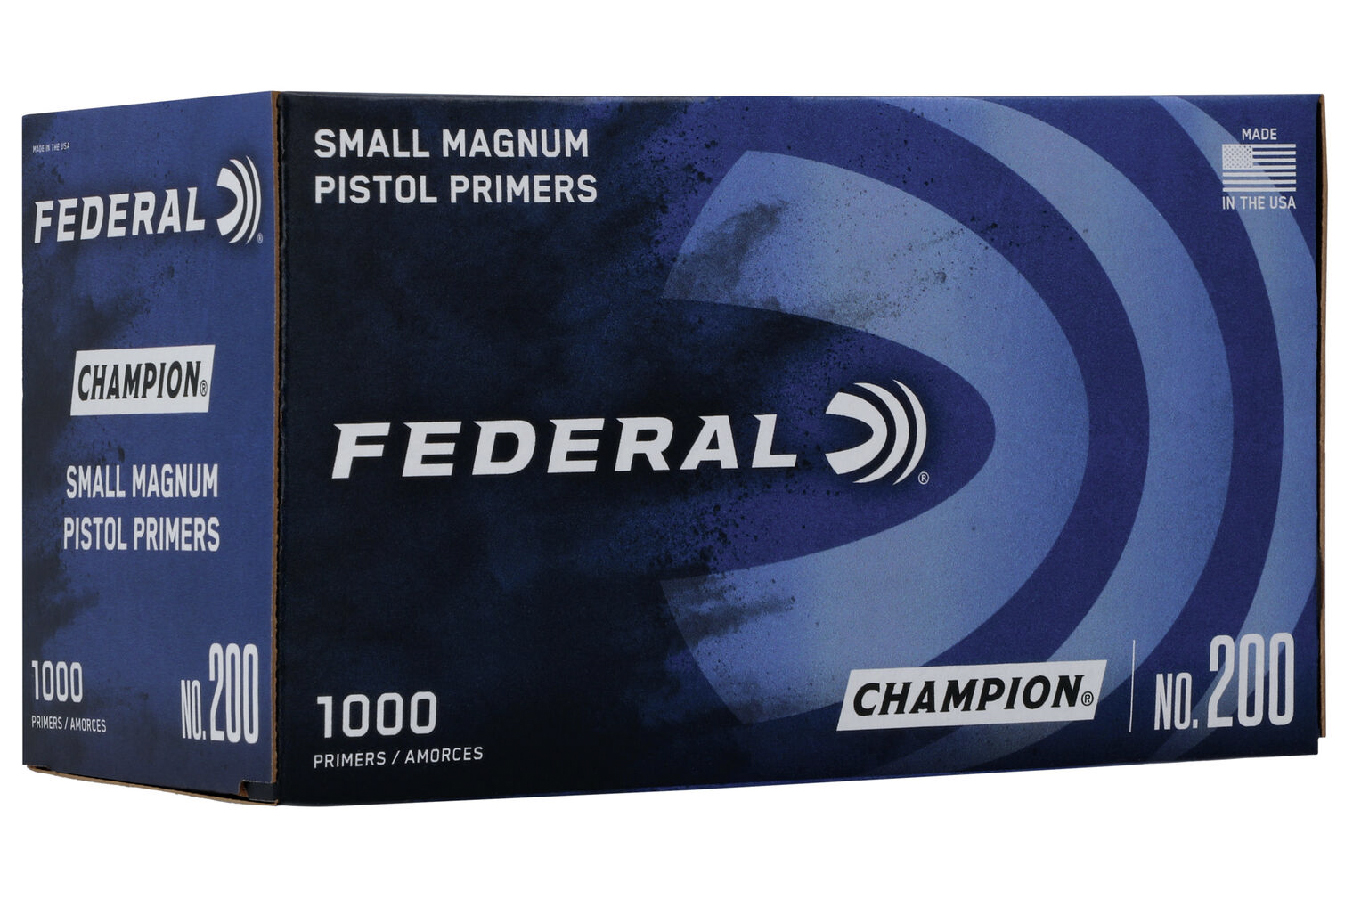 SMALL MAGNUM PISTOL PRIMERS (CHAMPION) 1000/BOX